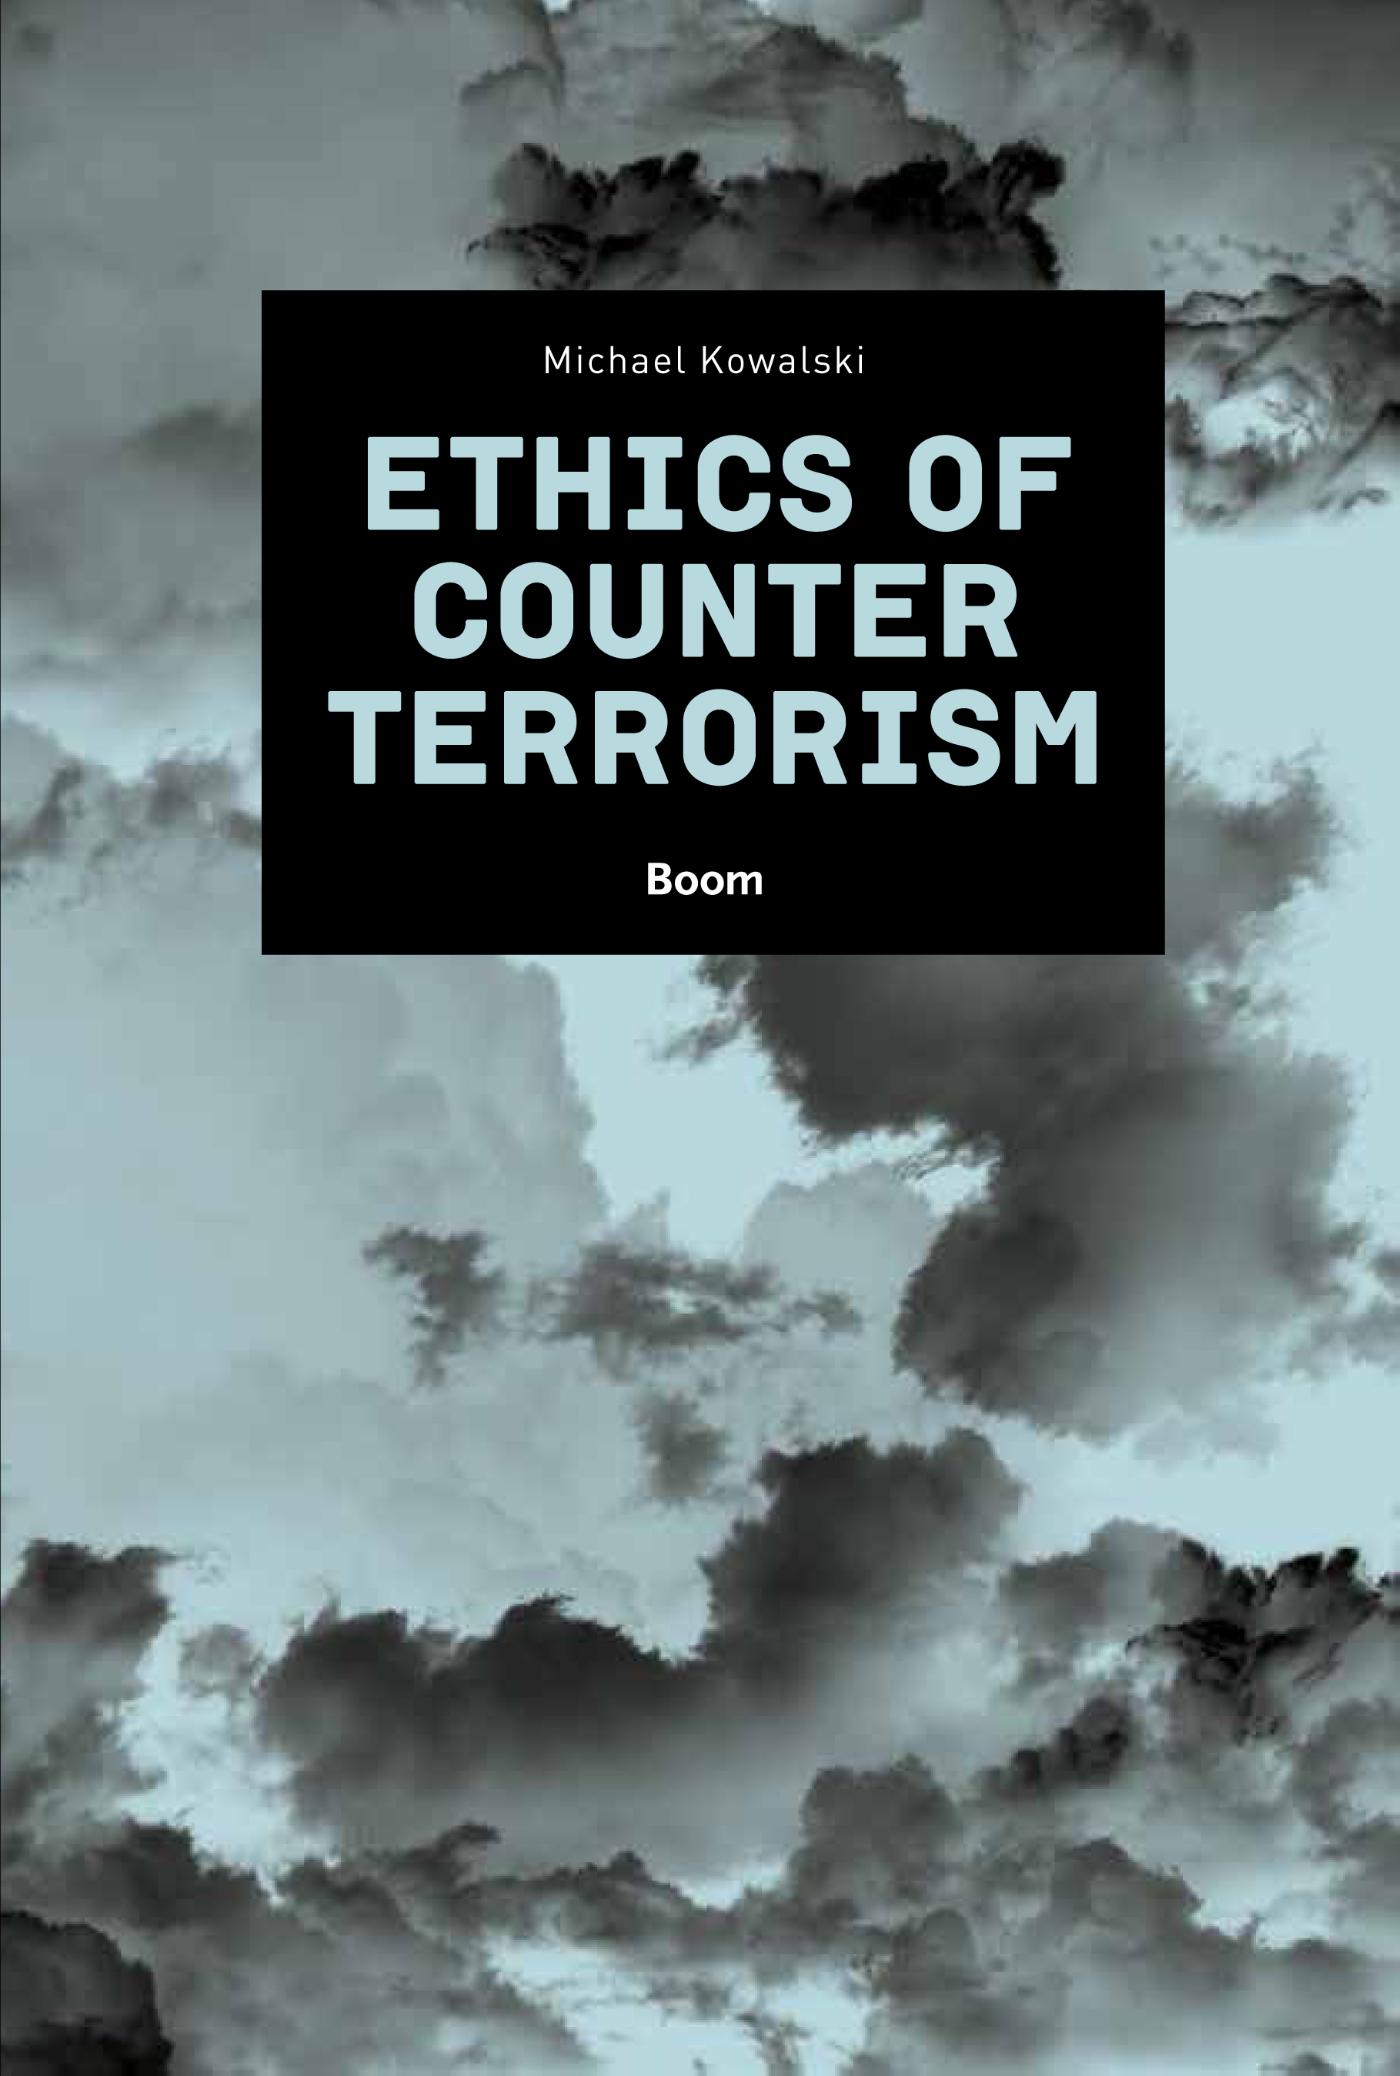 Ethics of counterterrorism (Ebook)